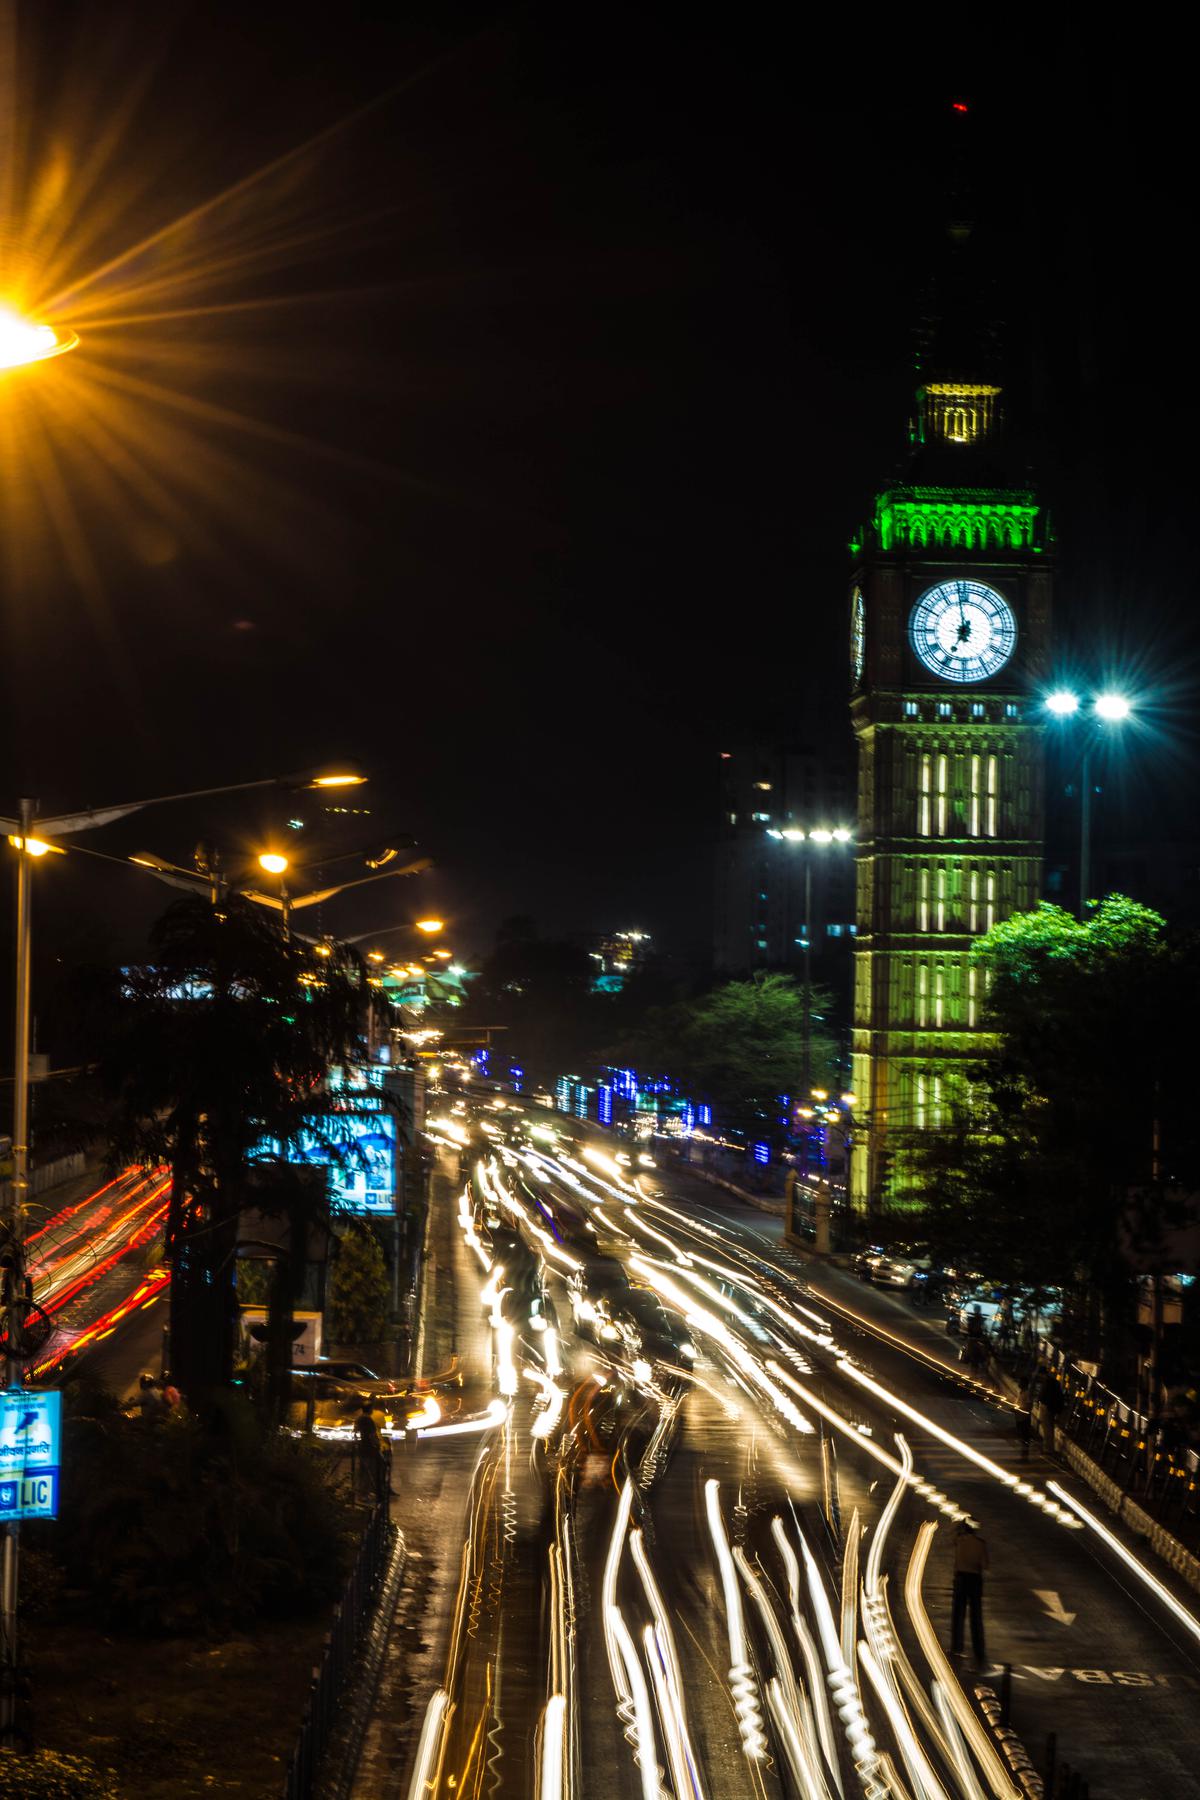 Kolkata's Big Ben